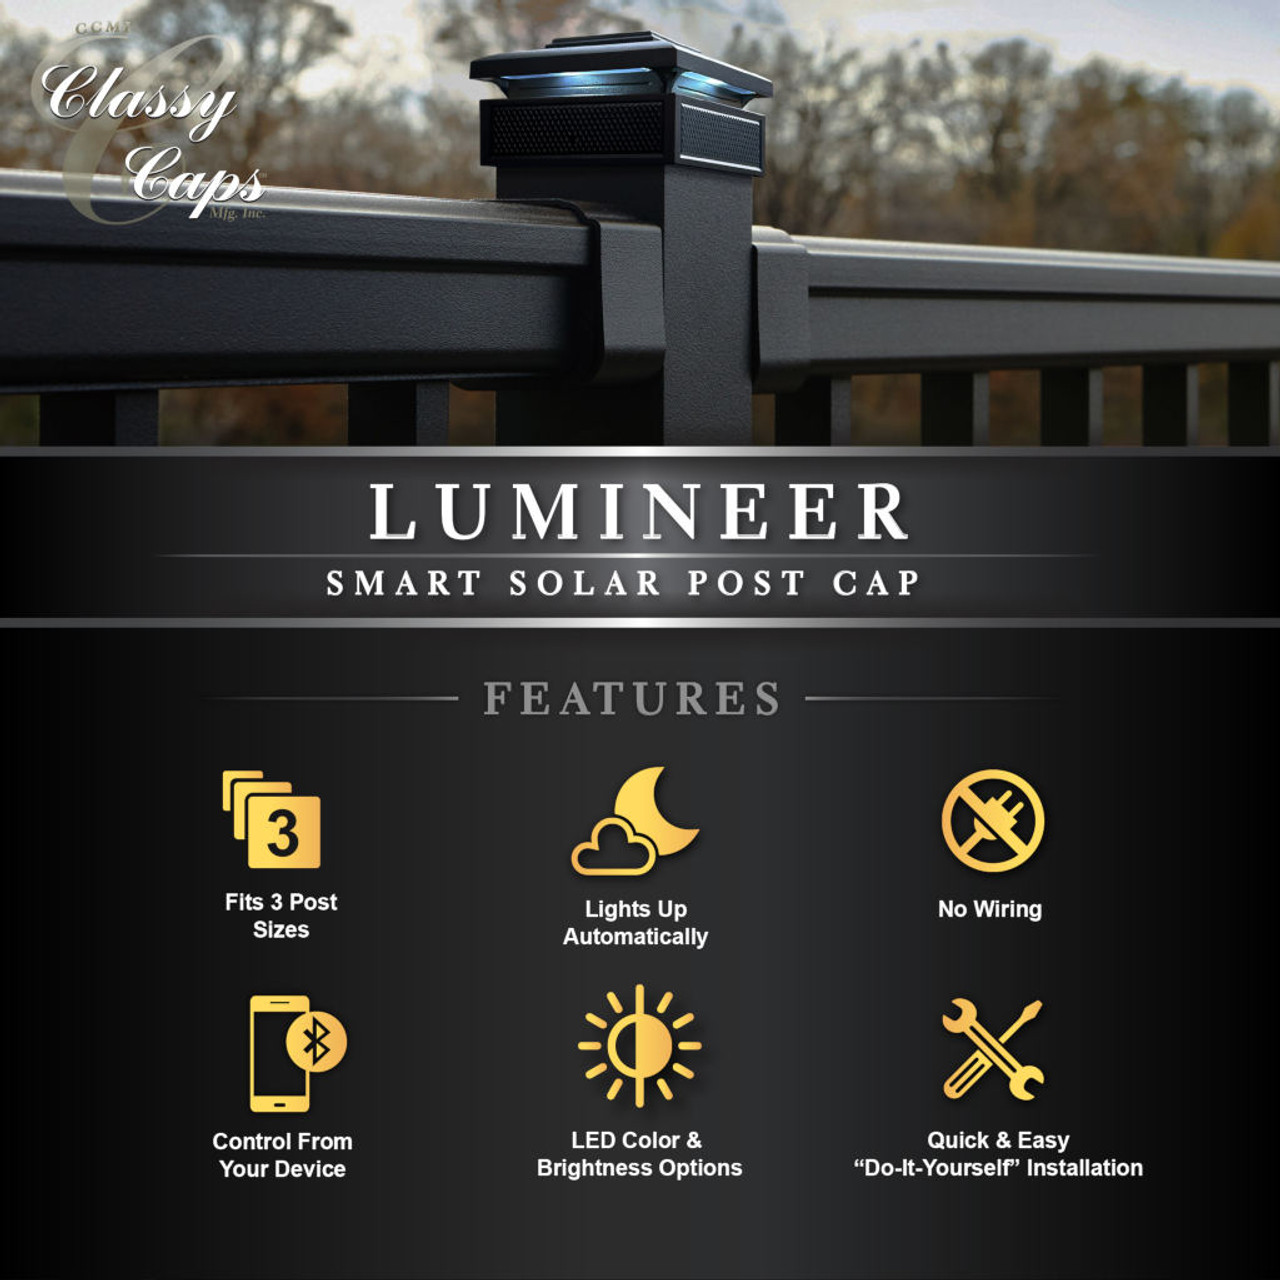 Lumineer Smart Solar Post Cap Features